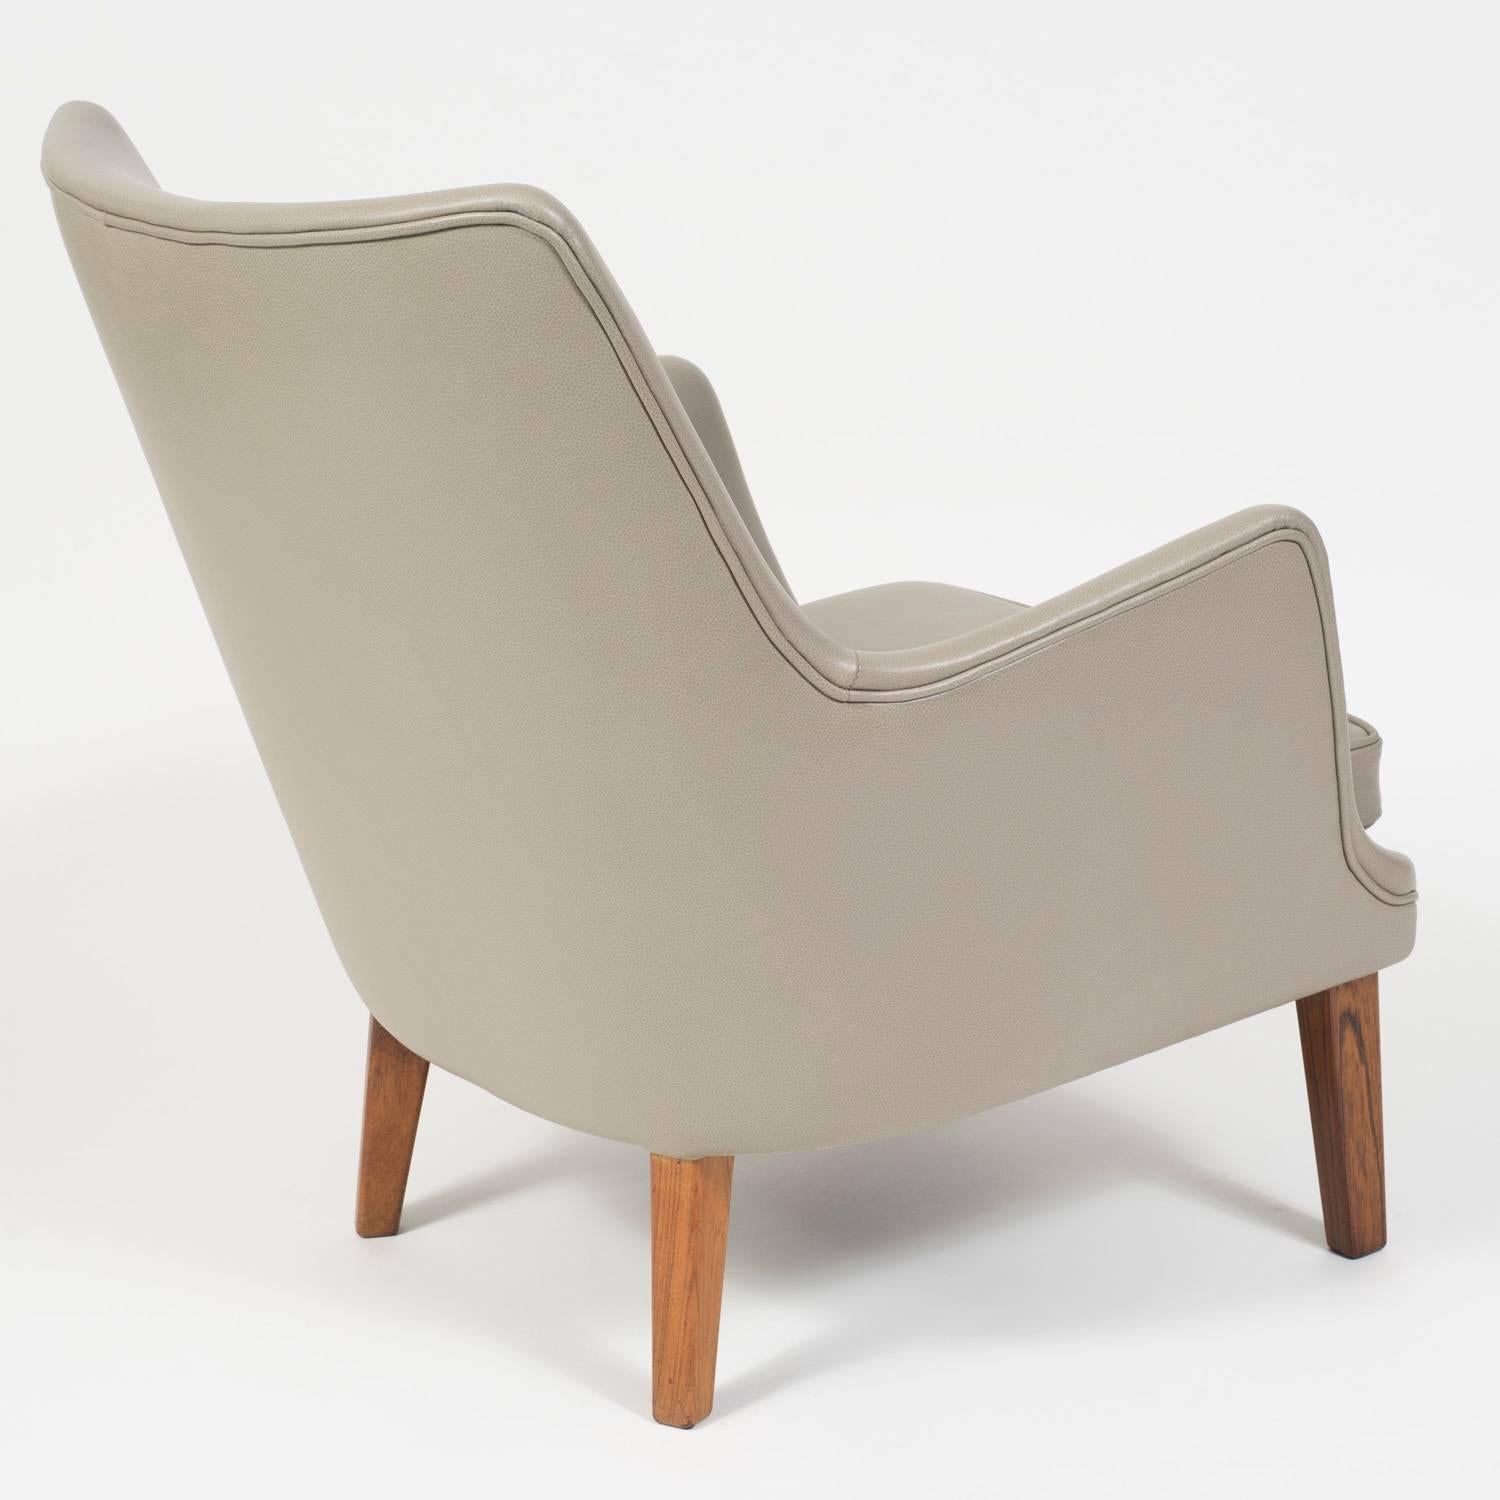 Scandinavian Modern Pair of Arne Vodder Leather Lounge Chairs by Ivan Schlechter, Denmark, 1953